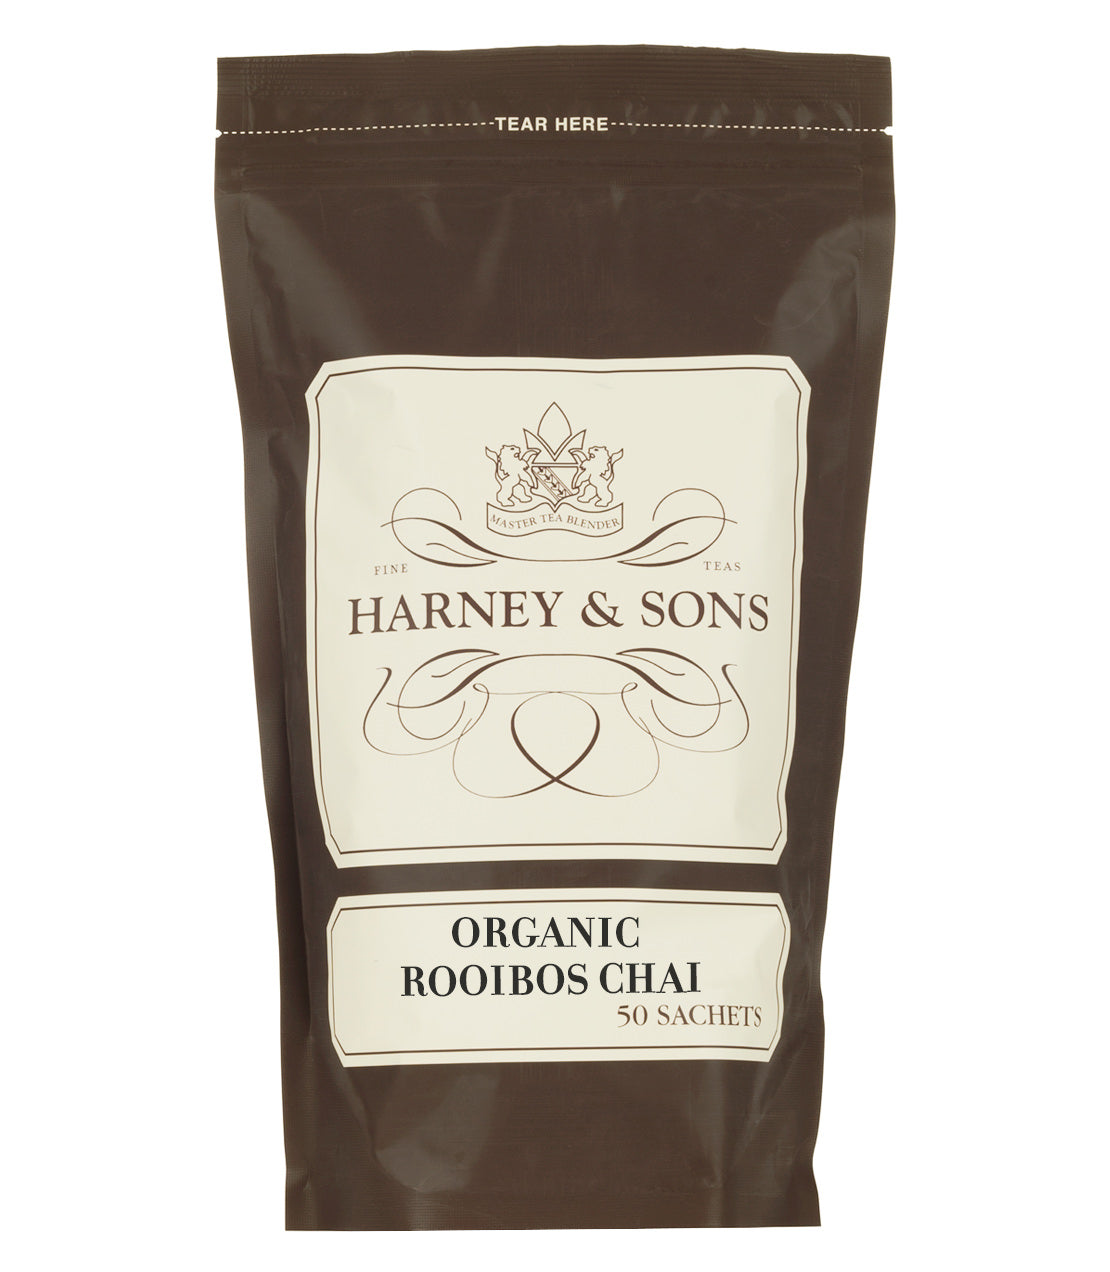 Organic Rooibos Chai - Sachets Bag of 50 Sachets - Harney & Sons Fine Teas